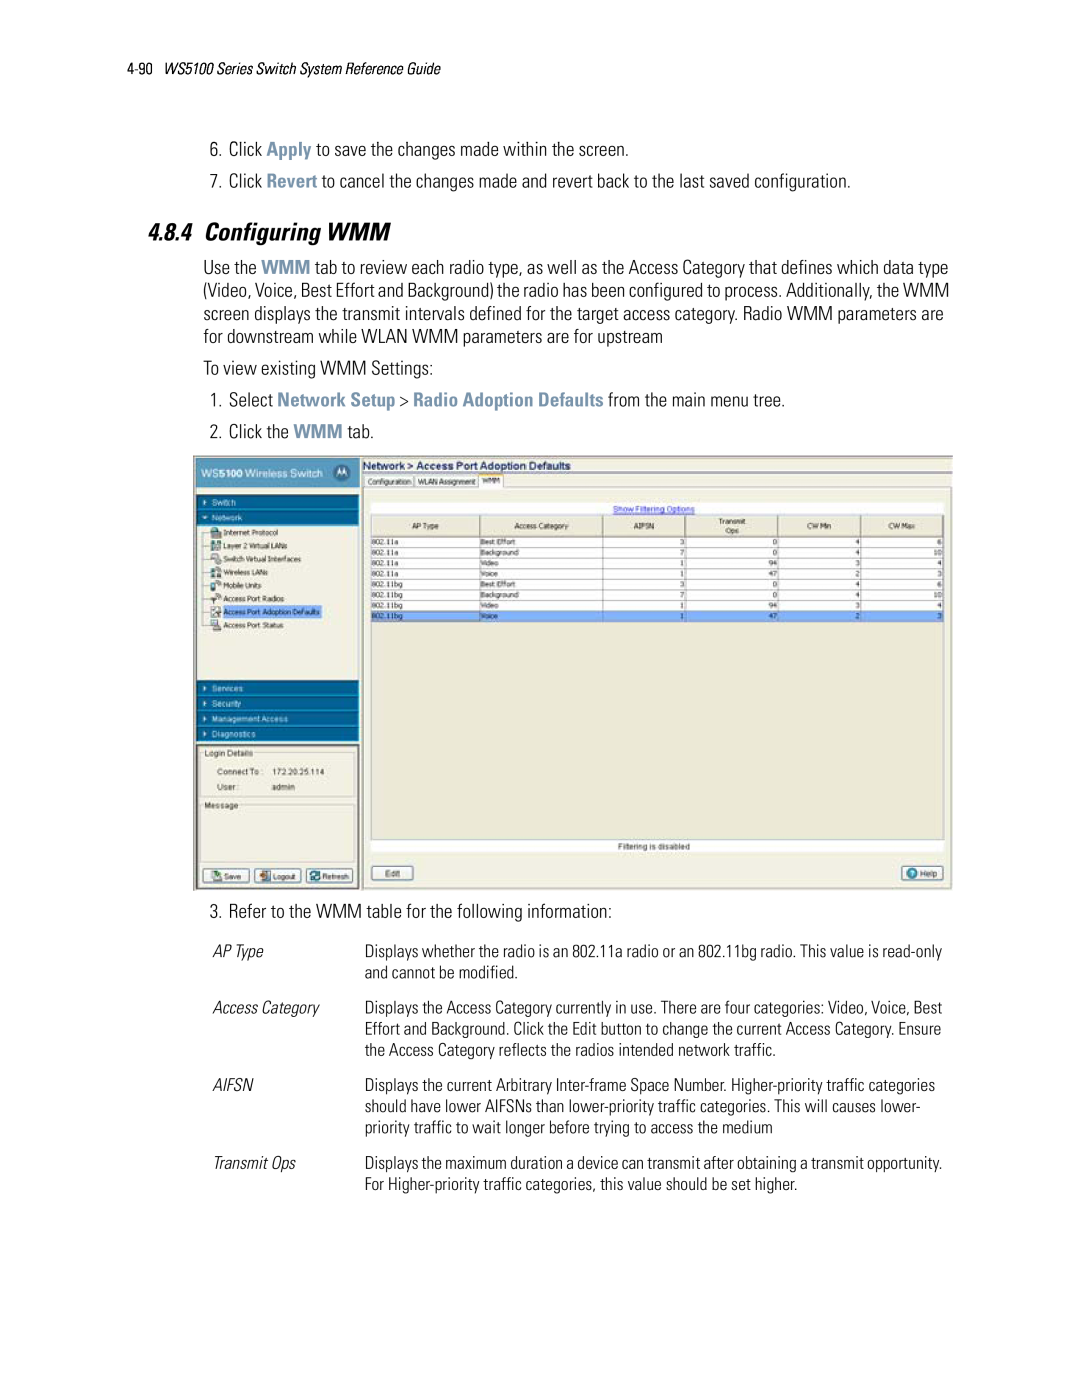 Motorola WS5100 manual 4.8.4Configuring WMM 